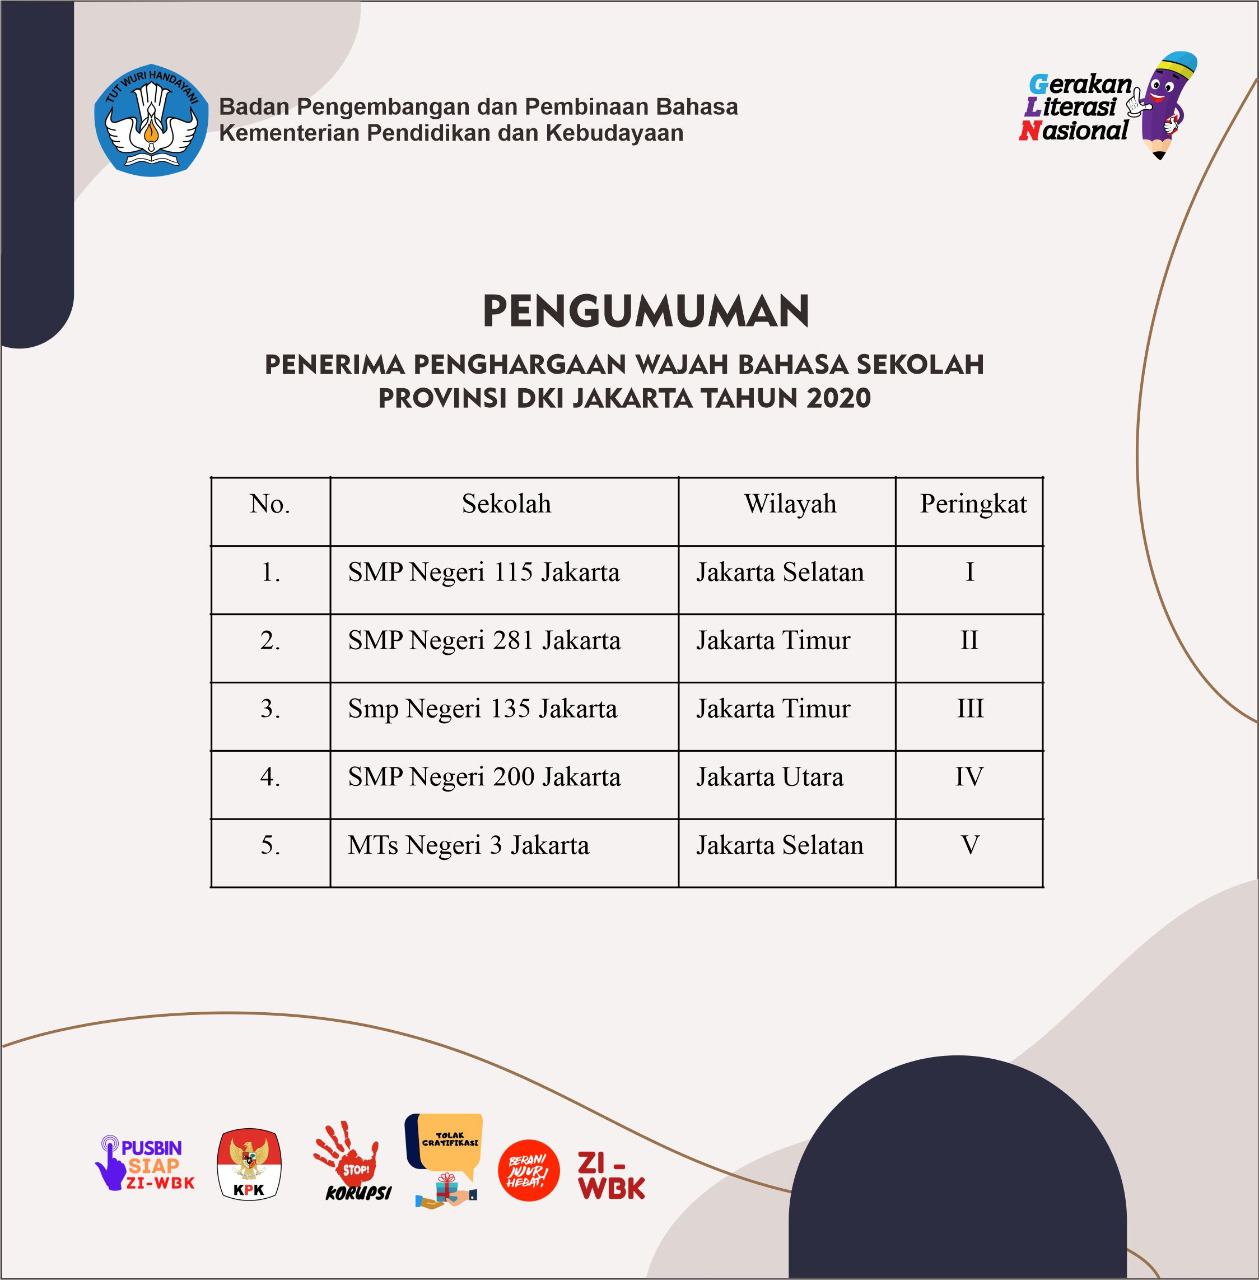 Penerima Penghargaan Wajah Bahasa Sekolah Provinsi DKI Jakarta Tahun 2020